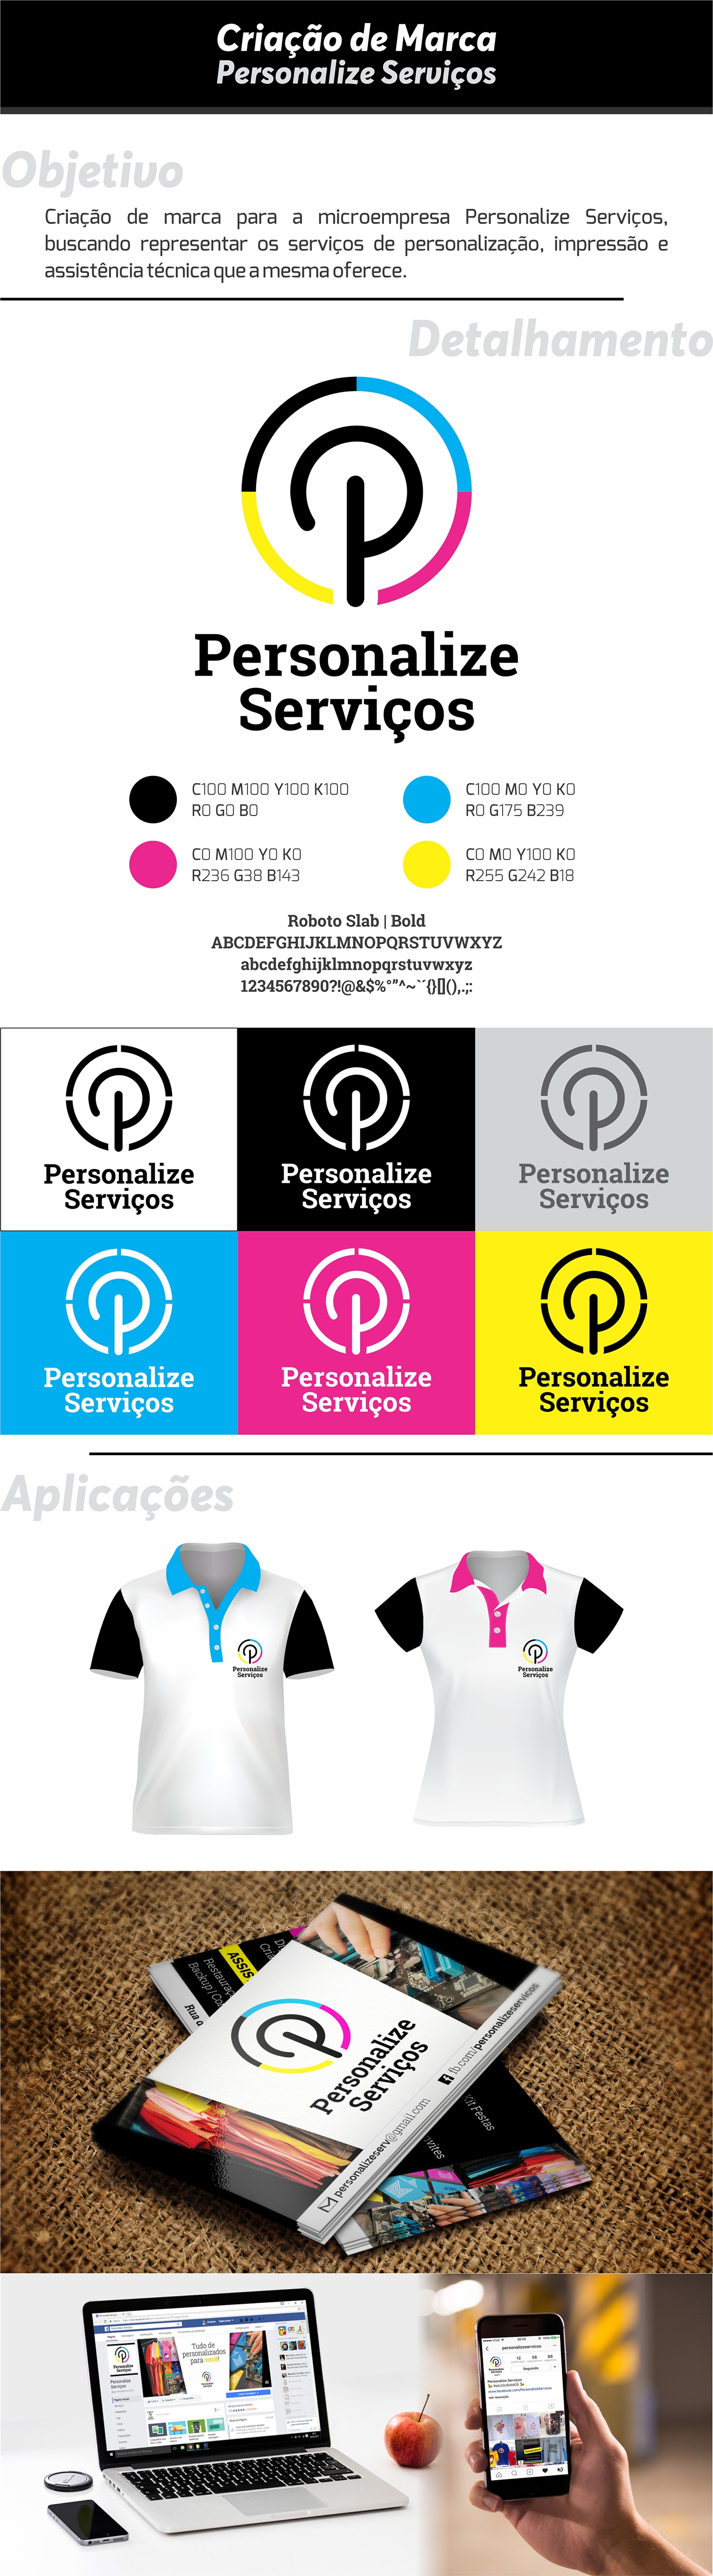 design design gráfico marca brand identidade visual PERSONALIZADOS serviços personalization services